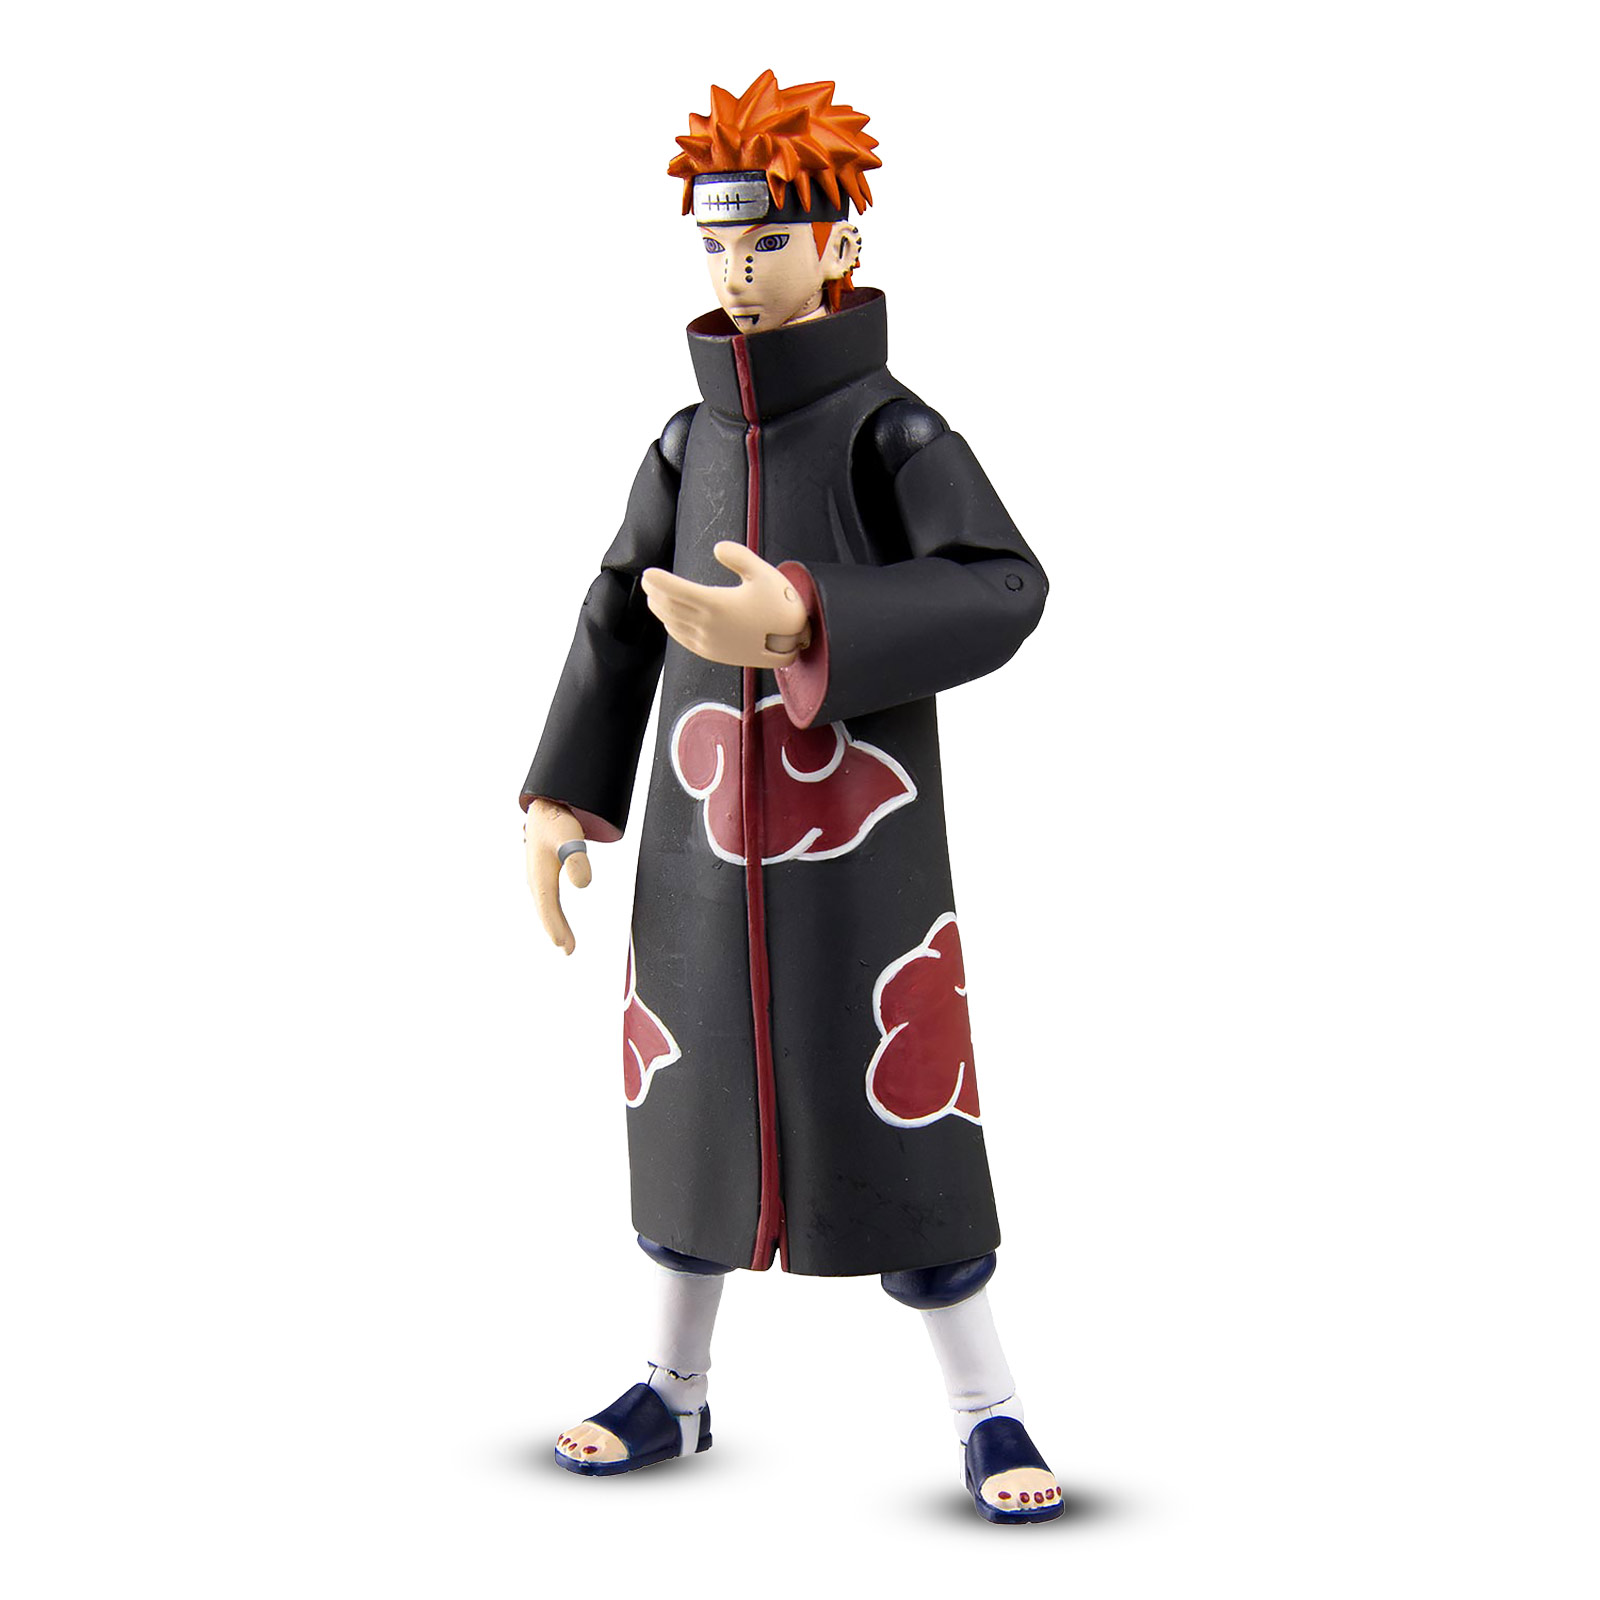 Naruto Shippuden - Naruto vs. Pain Figure Set Special Edition